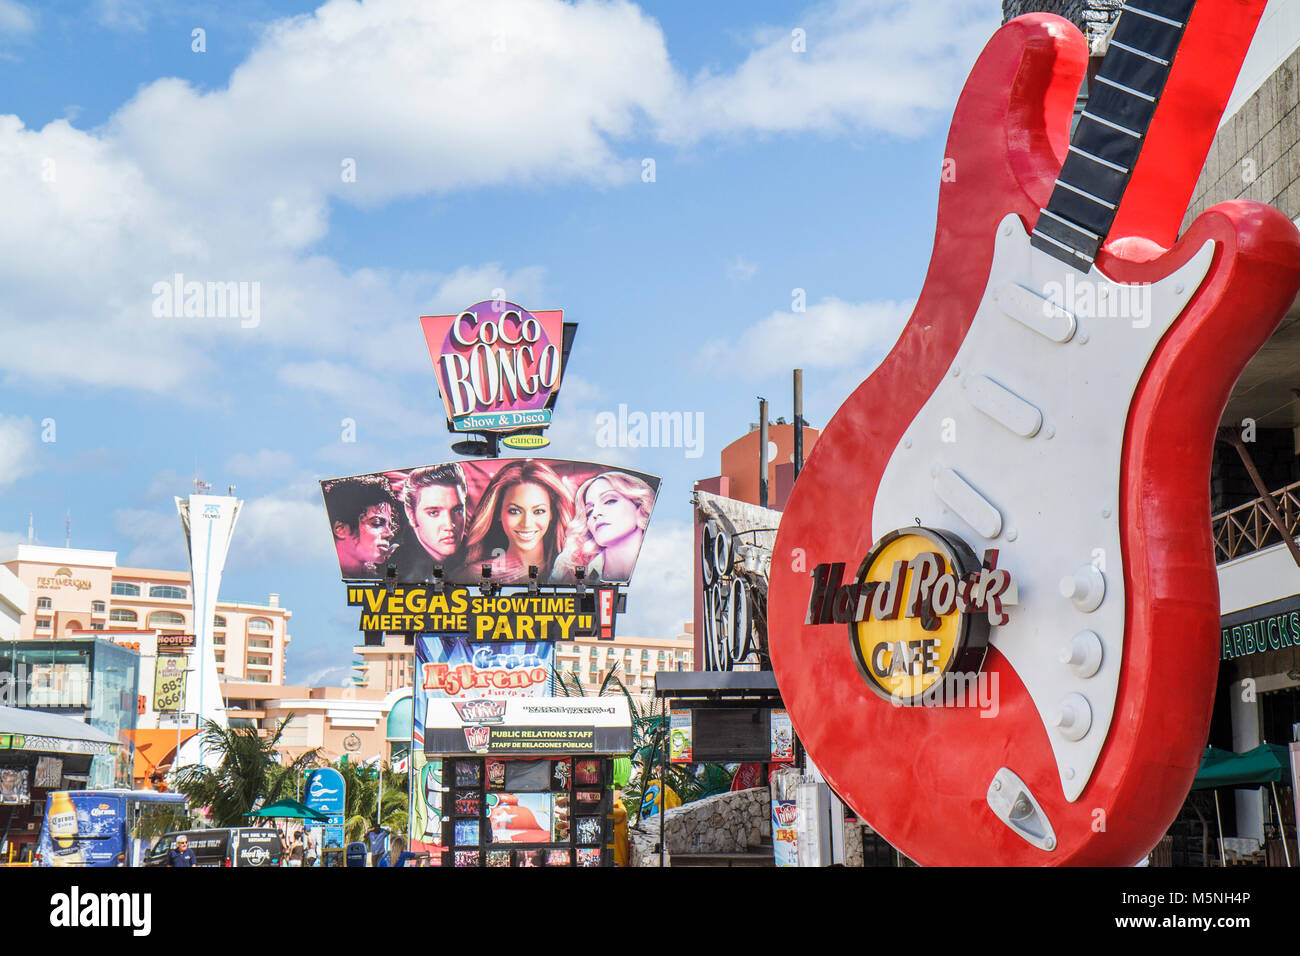 Cancun Mexico,Mexican Beach,Hotel Zone,Avenida Kukulkan,Plaza Forum,district,street scene,Hard Rock Cafe,guitar sign,Coco Bongo,billboard,advertisemen Stock Photo